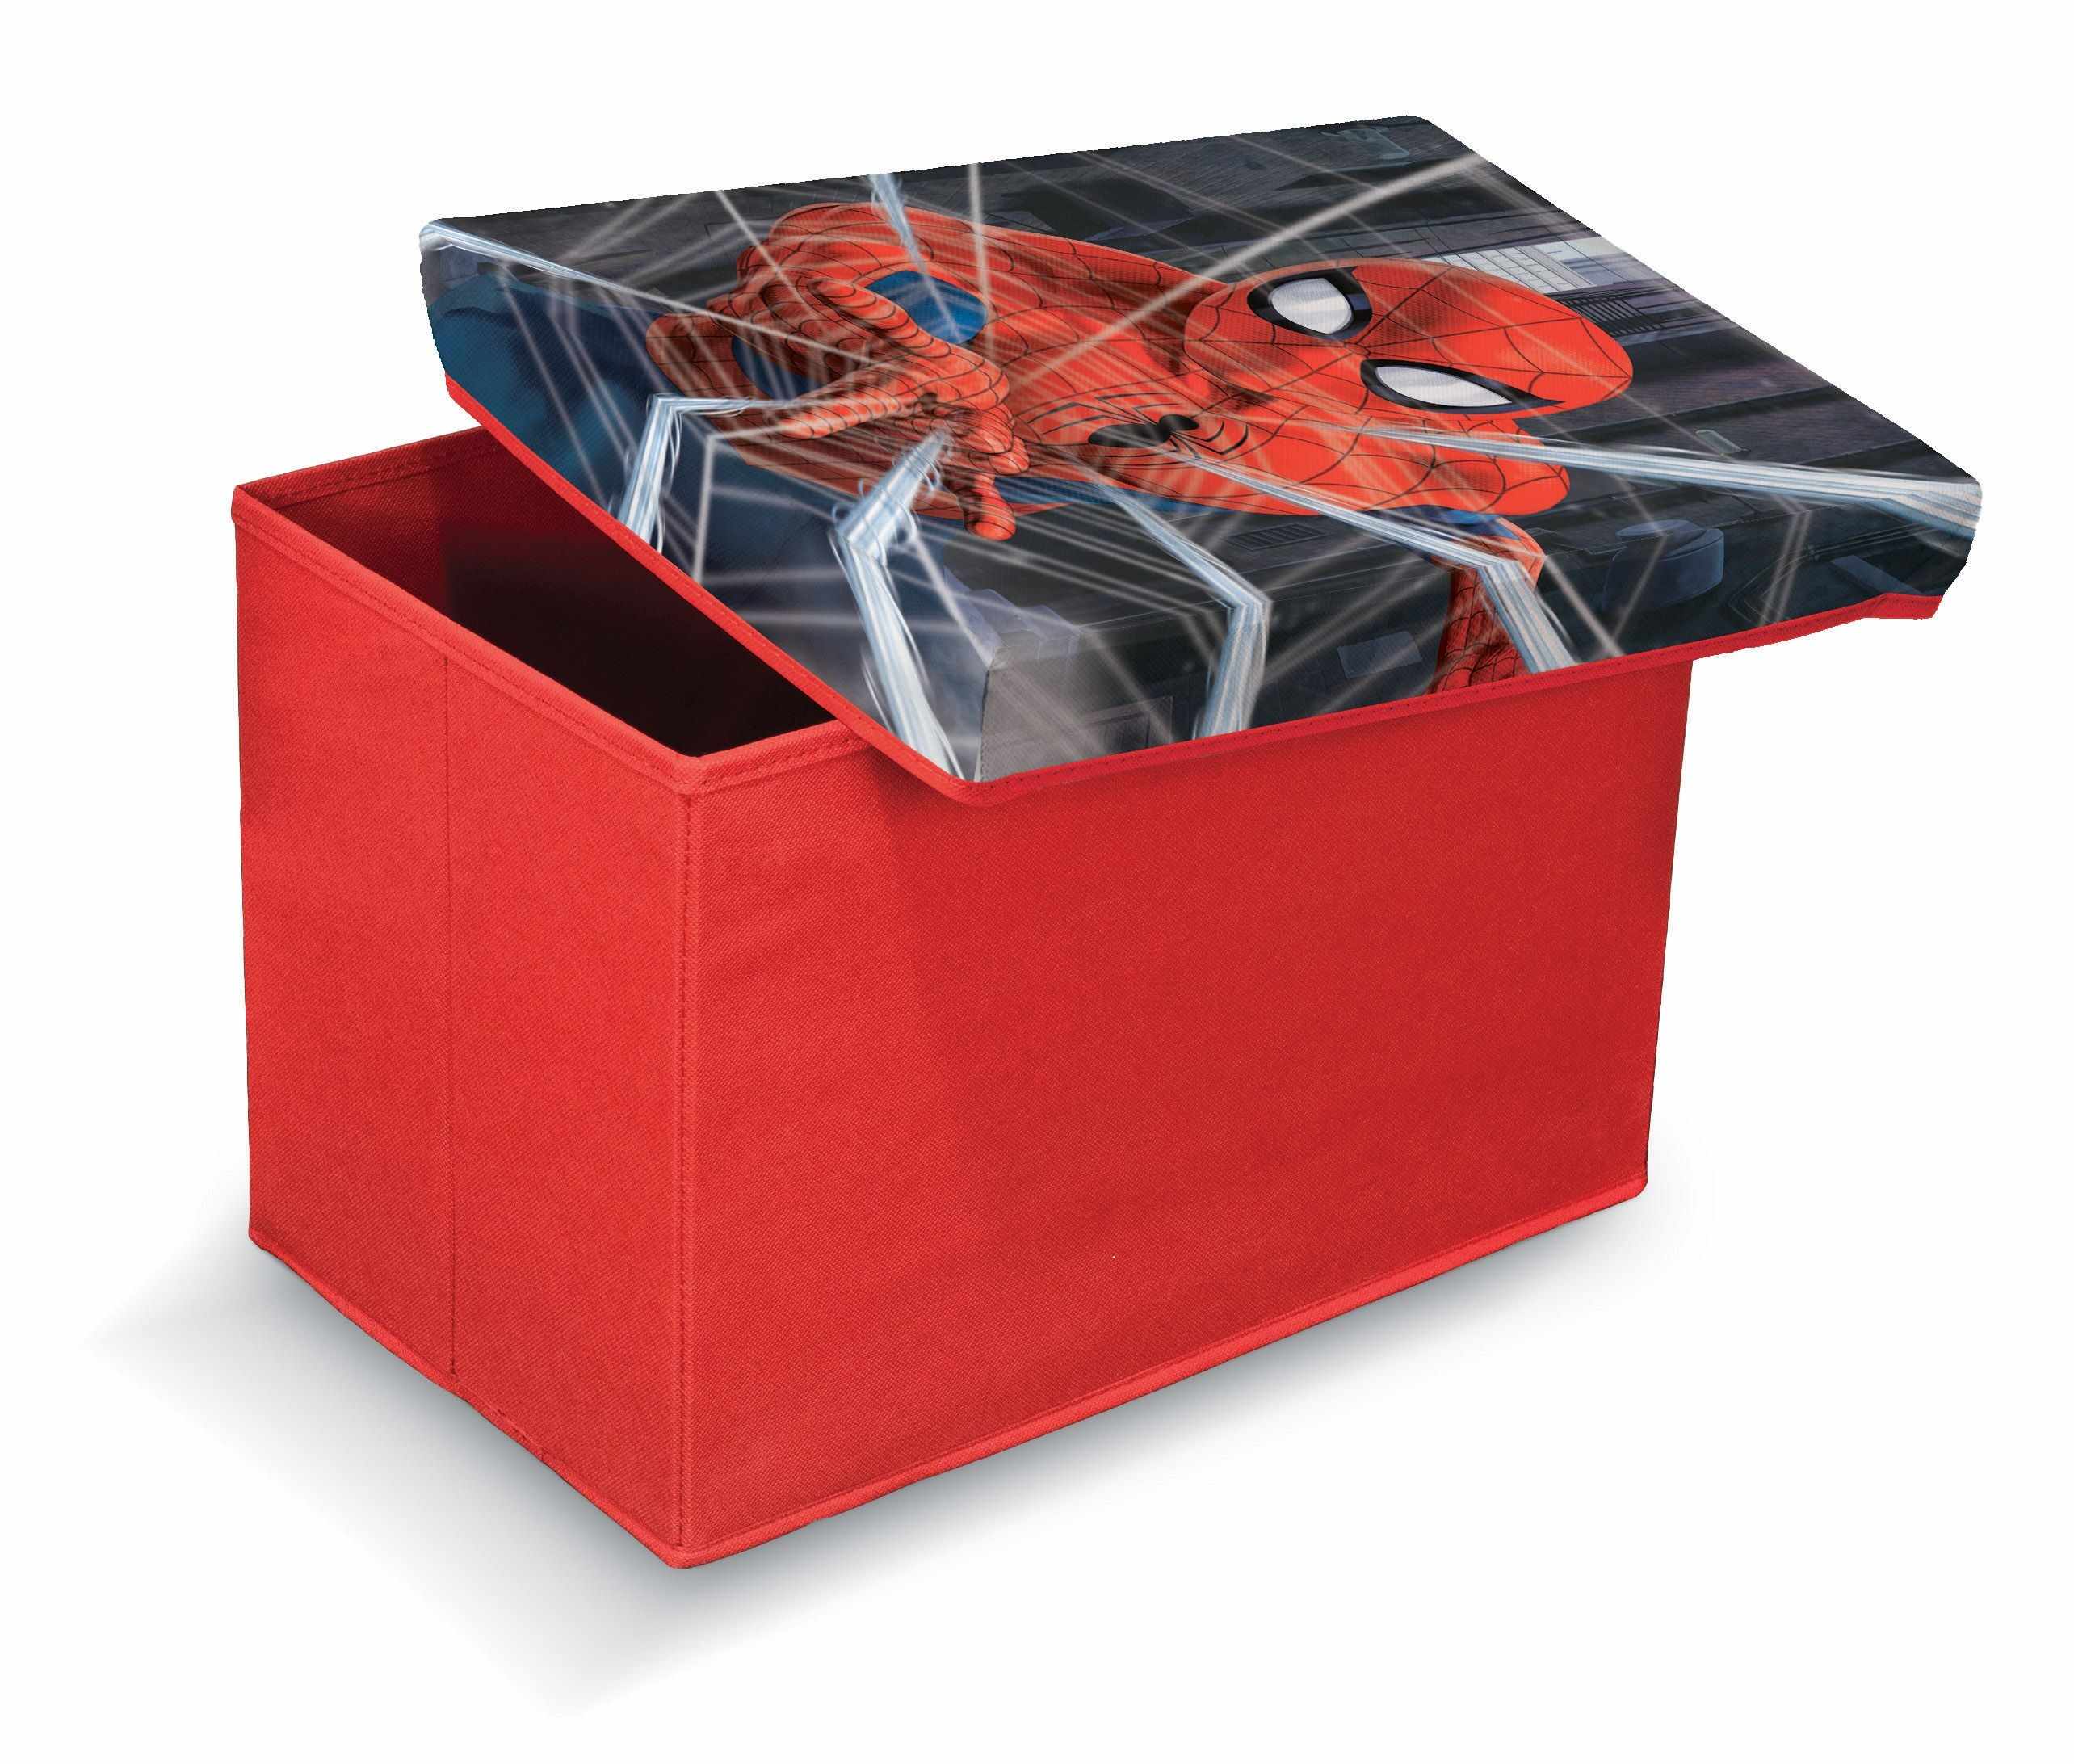 Taburet pentru copii cu spatiu de depozitare Spiderman II Rosu, l49xA31xH31 cm